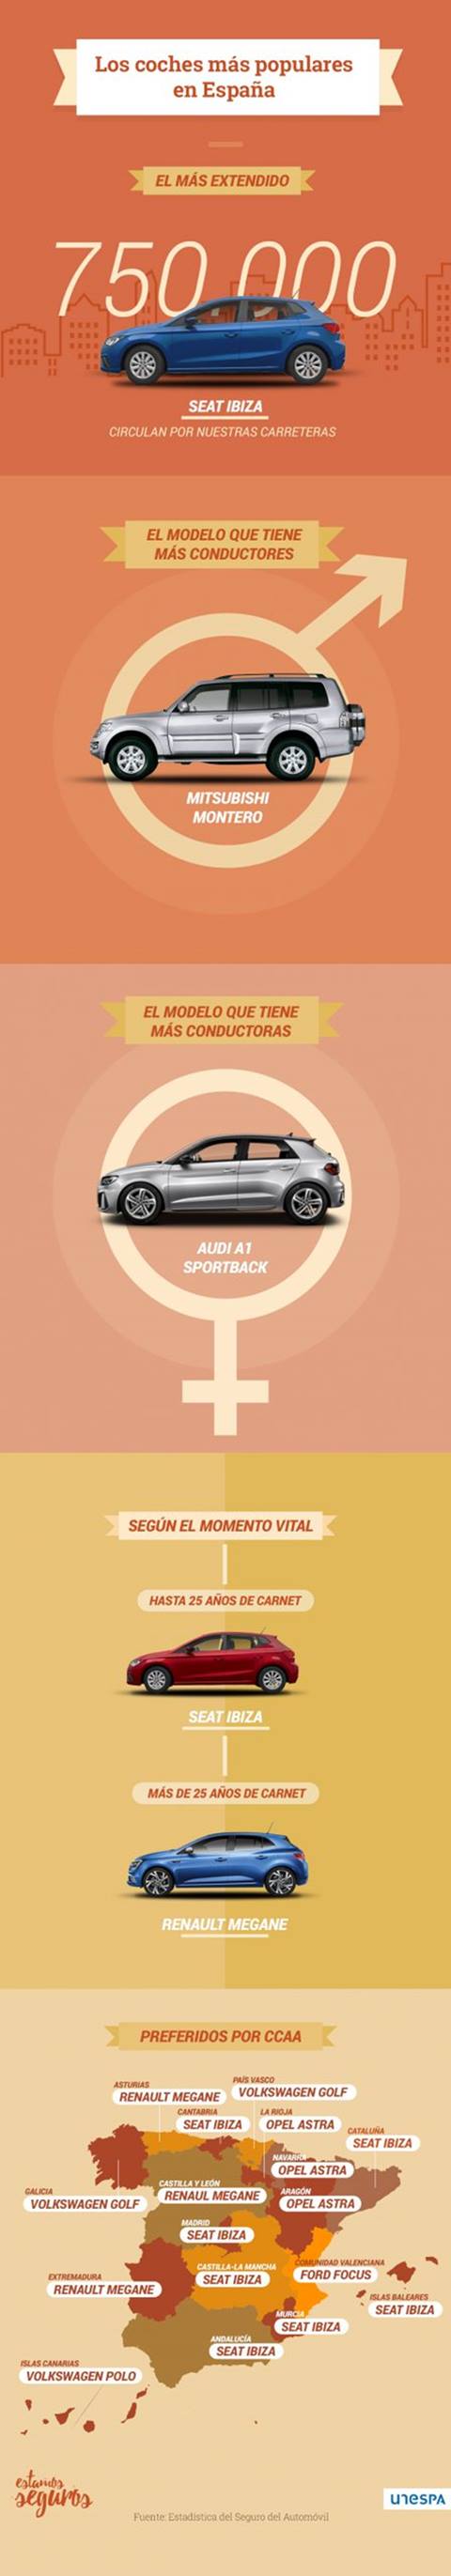 infografia-coches-populares